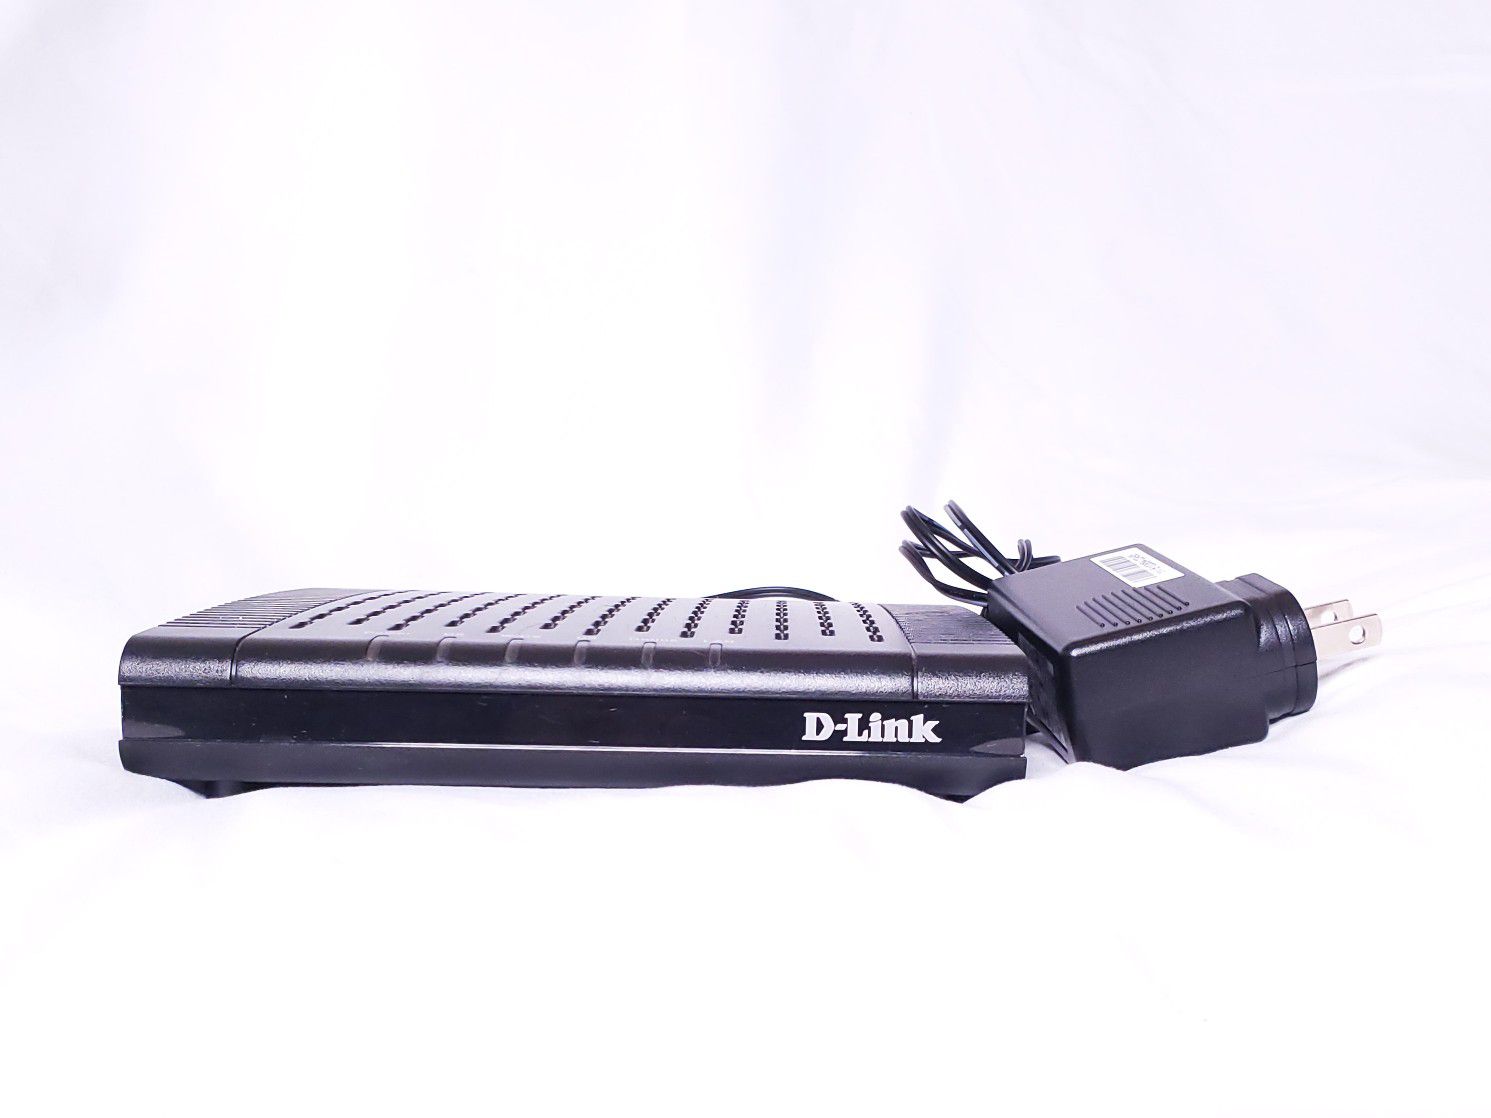 D-Link modem for Xfinity Comcast dcm - 301